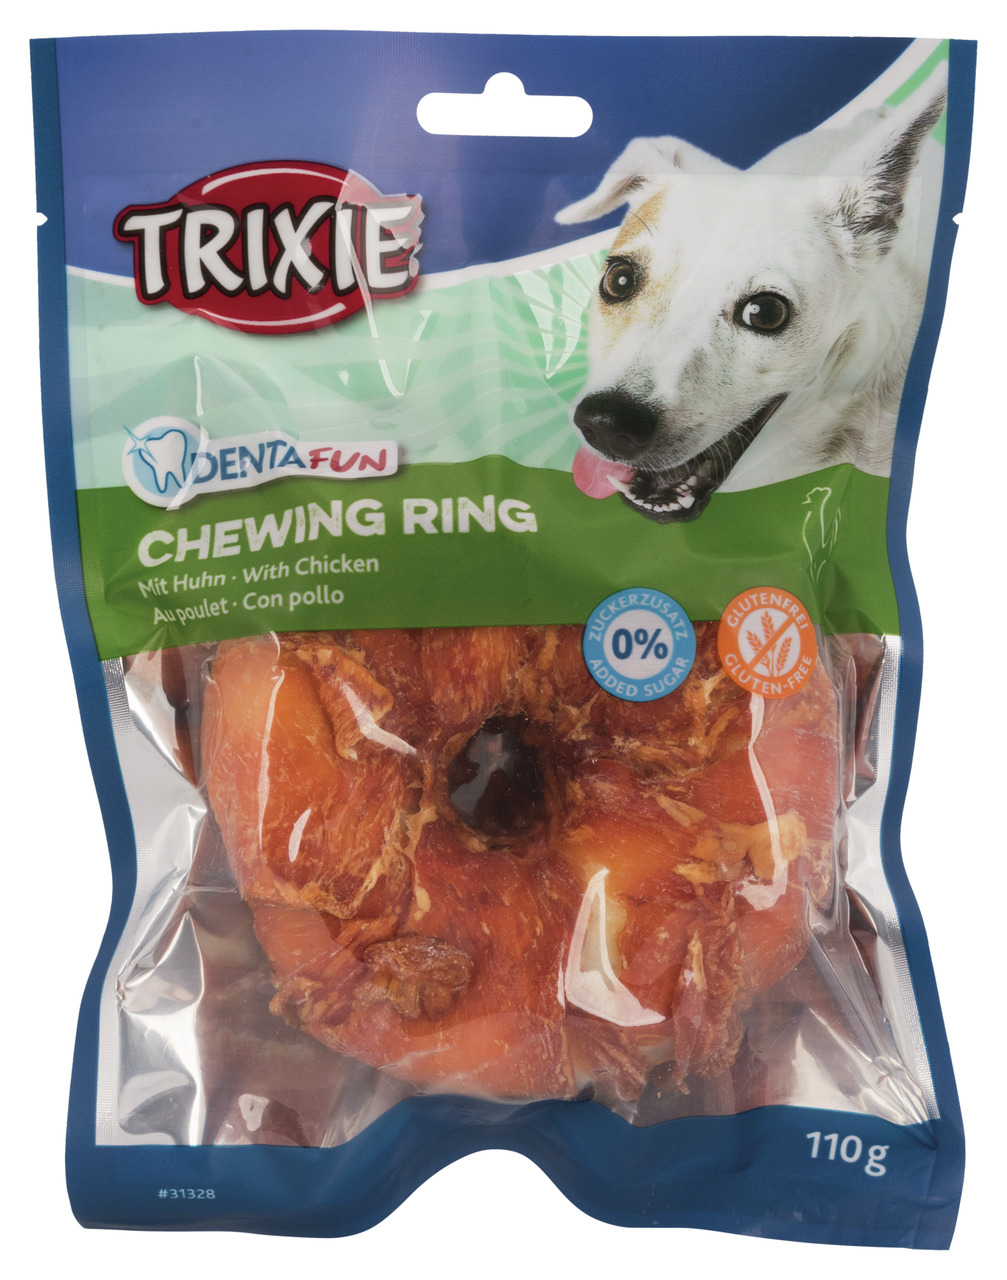 Sparpaket 2 x 110 g Trixie DentaFun Chewing Ring mit Huhn Hunde Snack